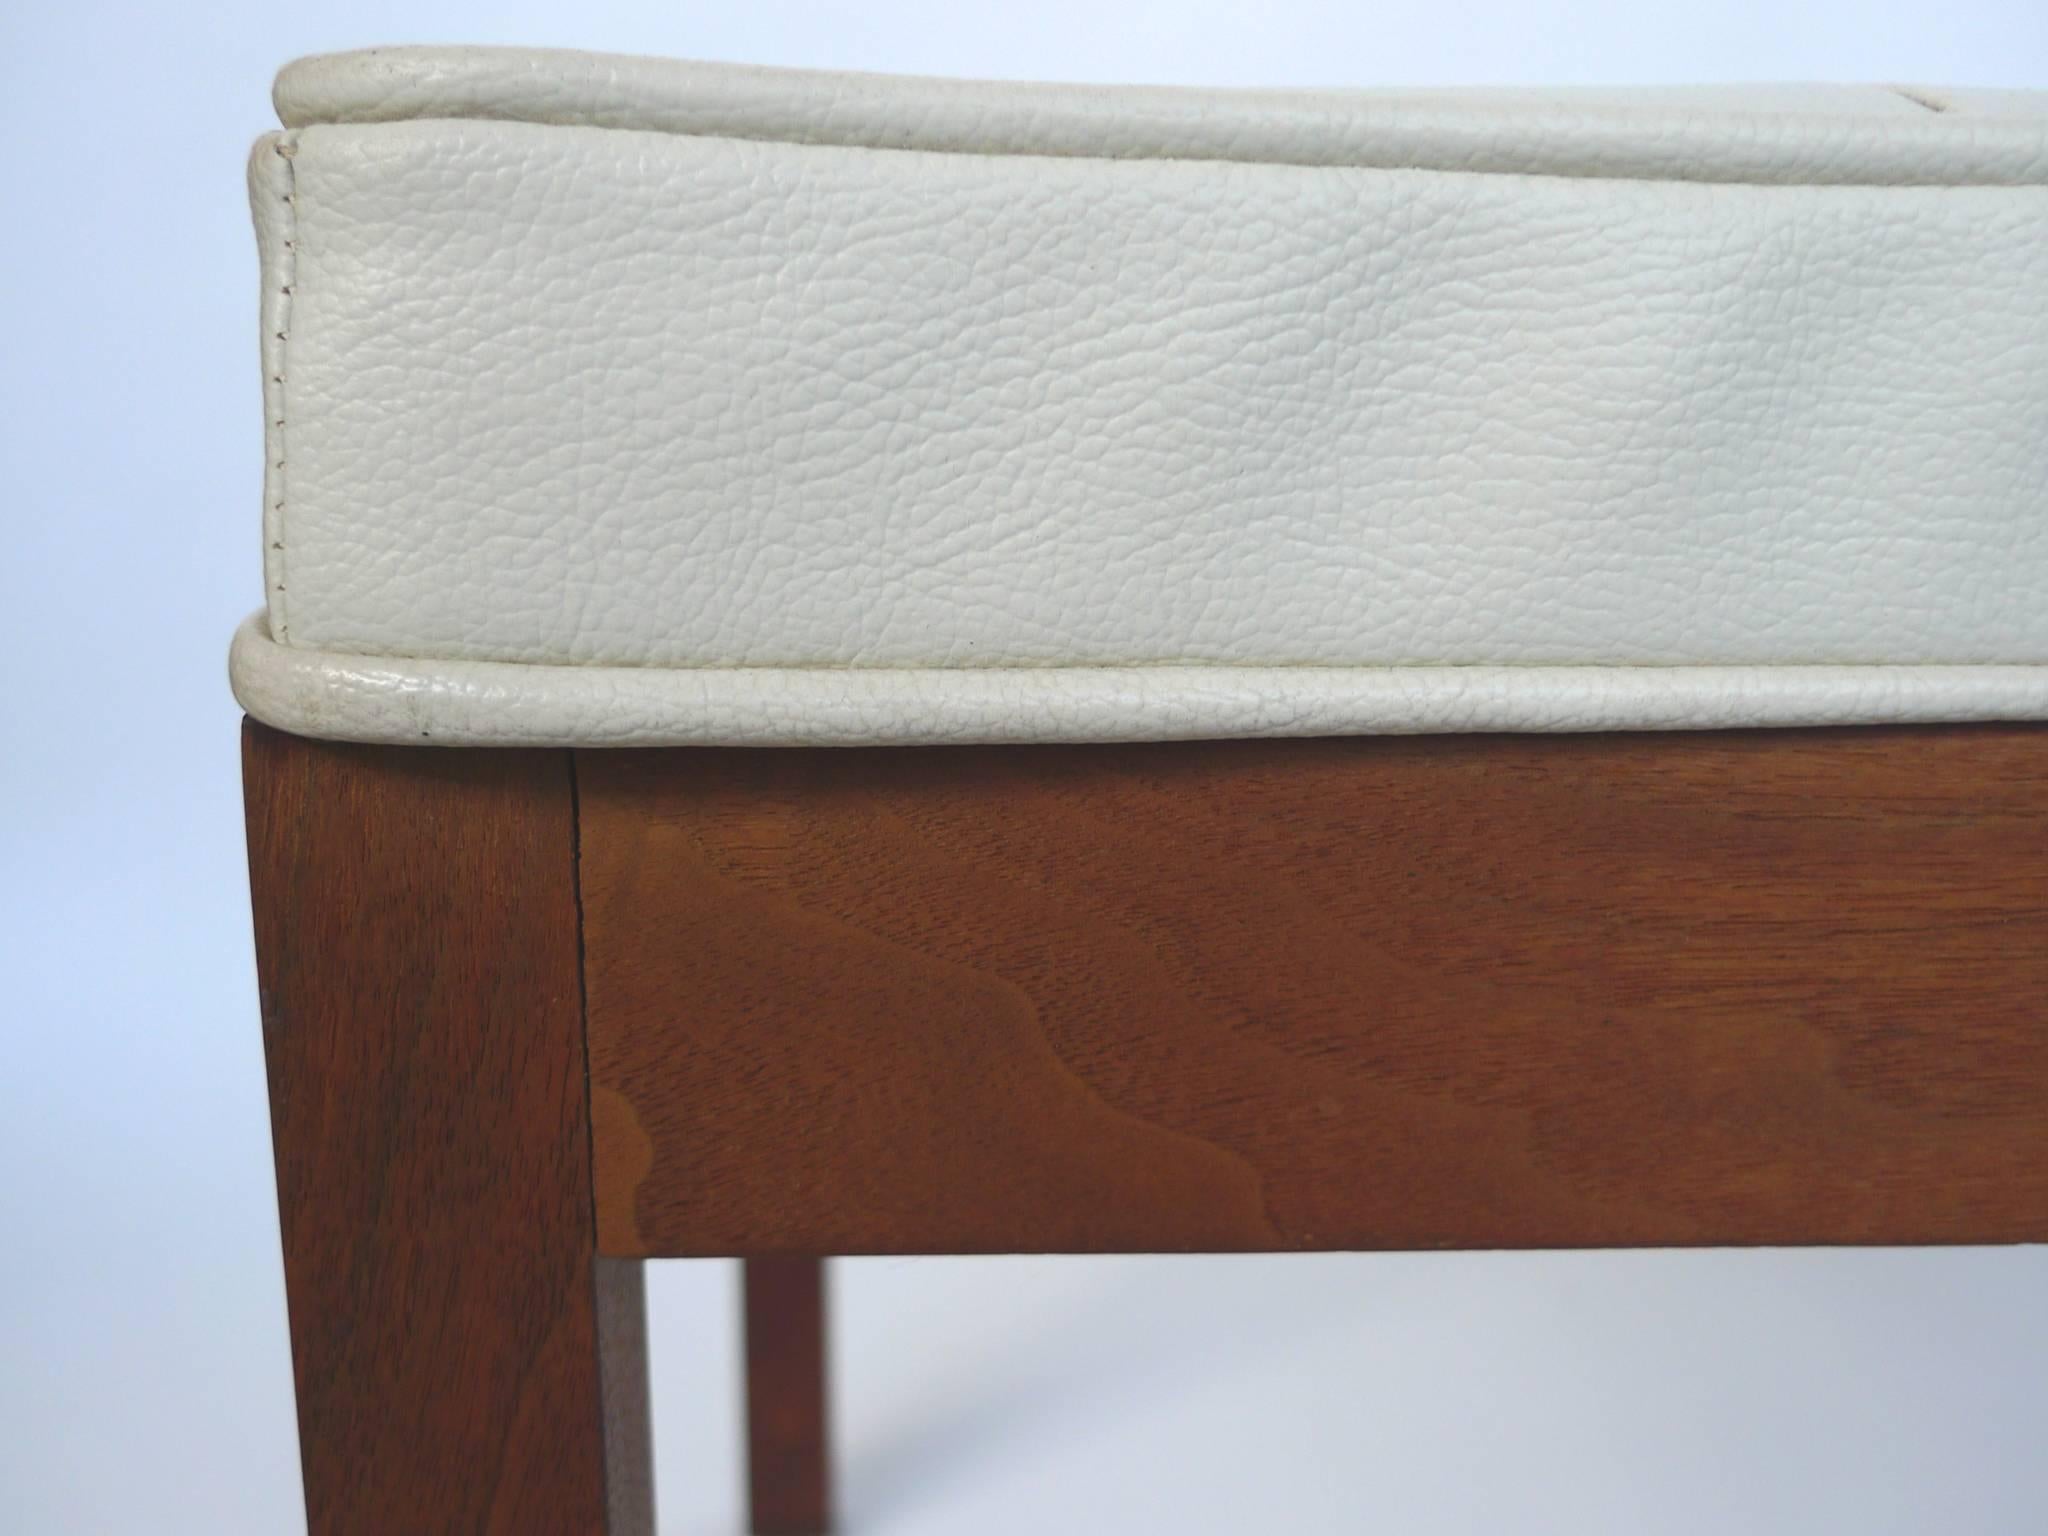 1960s White Vinyl Tufted Bench by Hibriten Chair Co 1